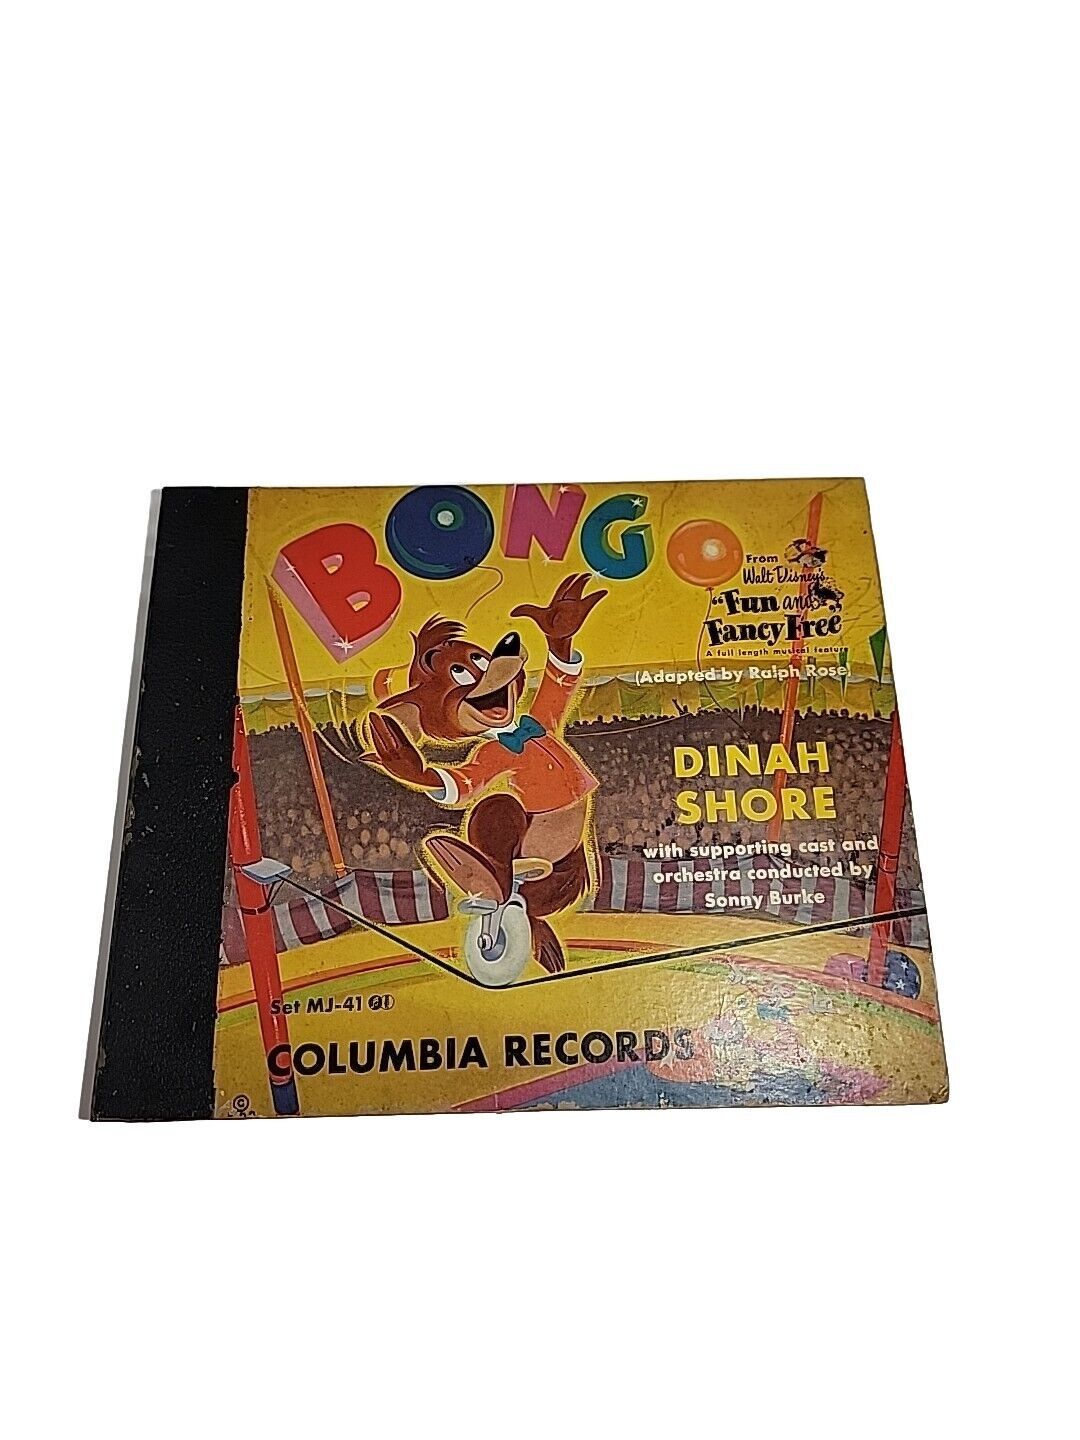 Vintage Bongo Walt Disney 4 Record Set Mj-41 Columbia Dinah Shore Collectible 